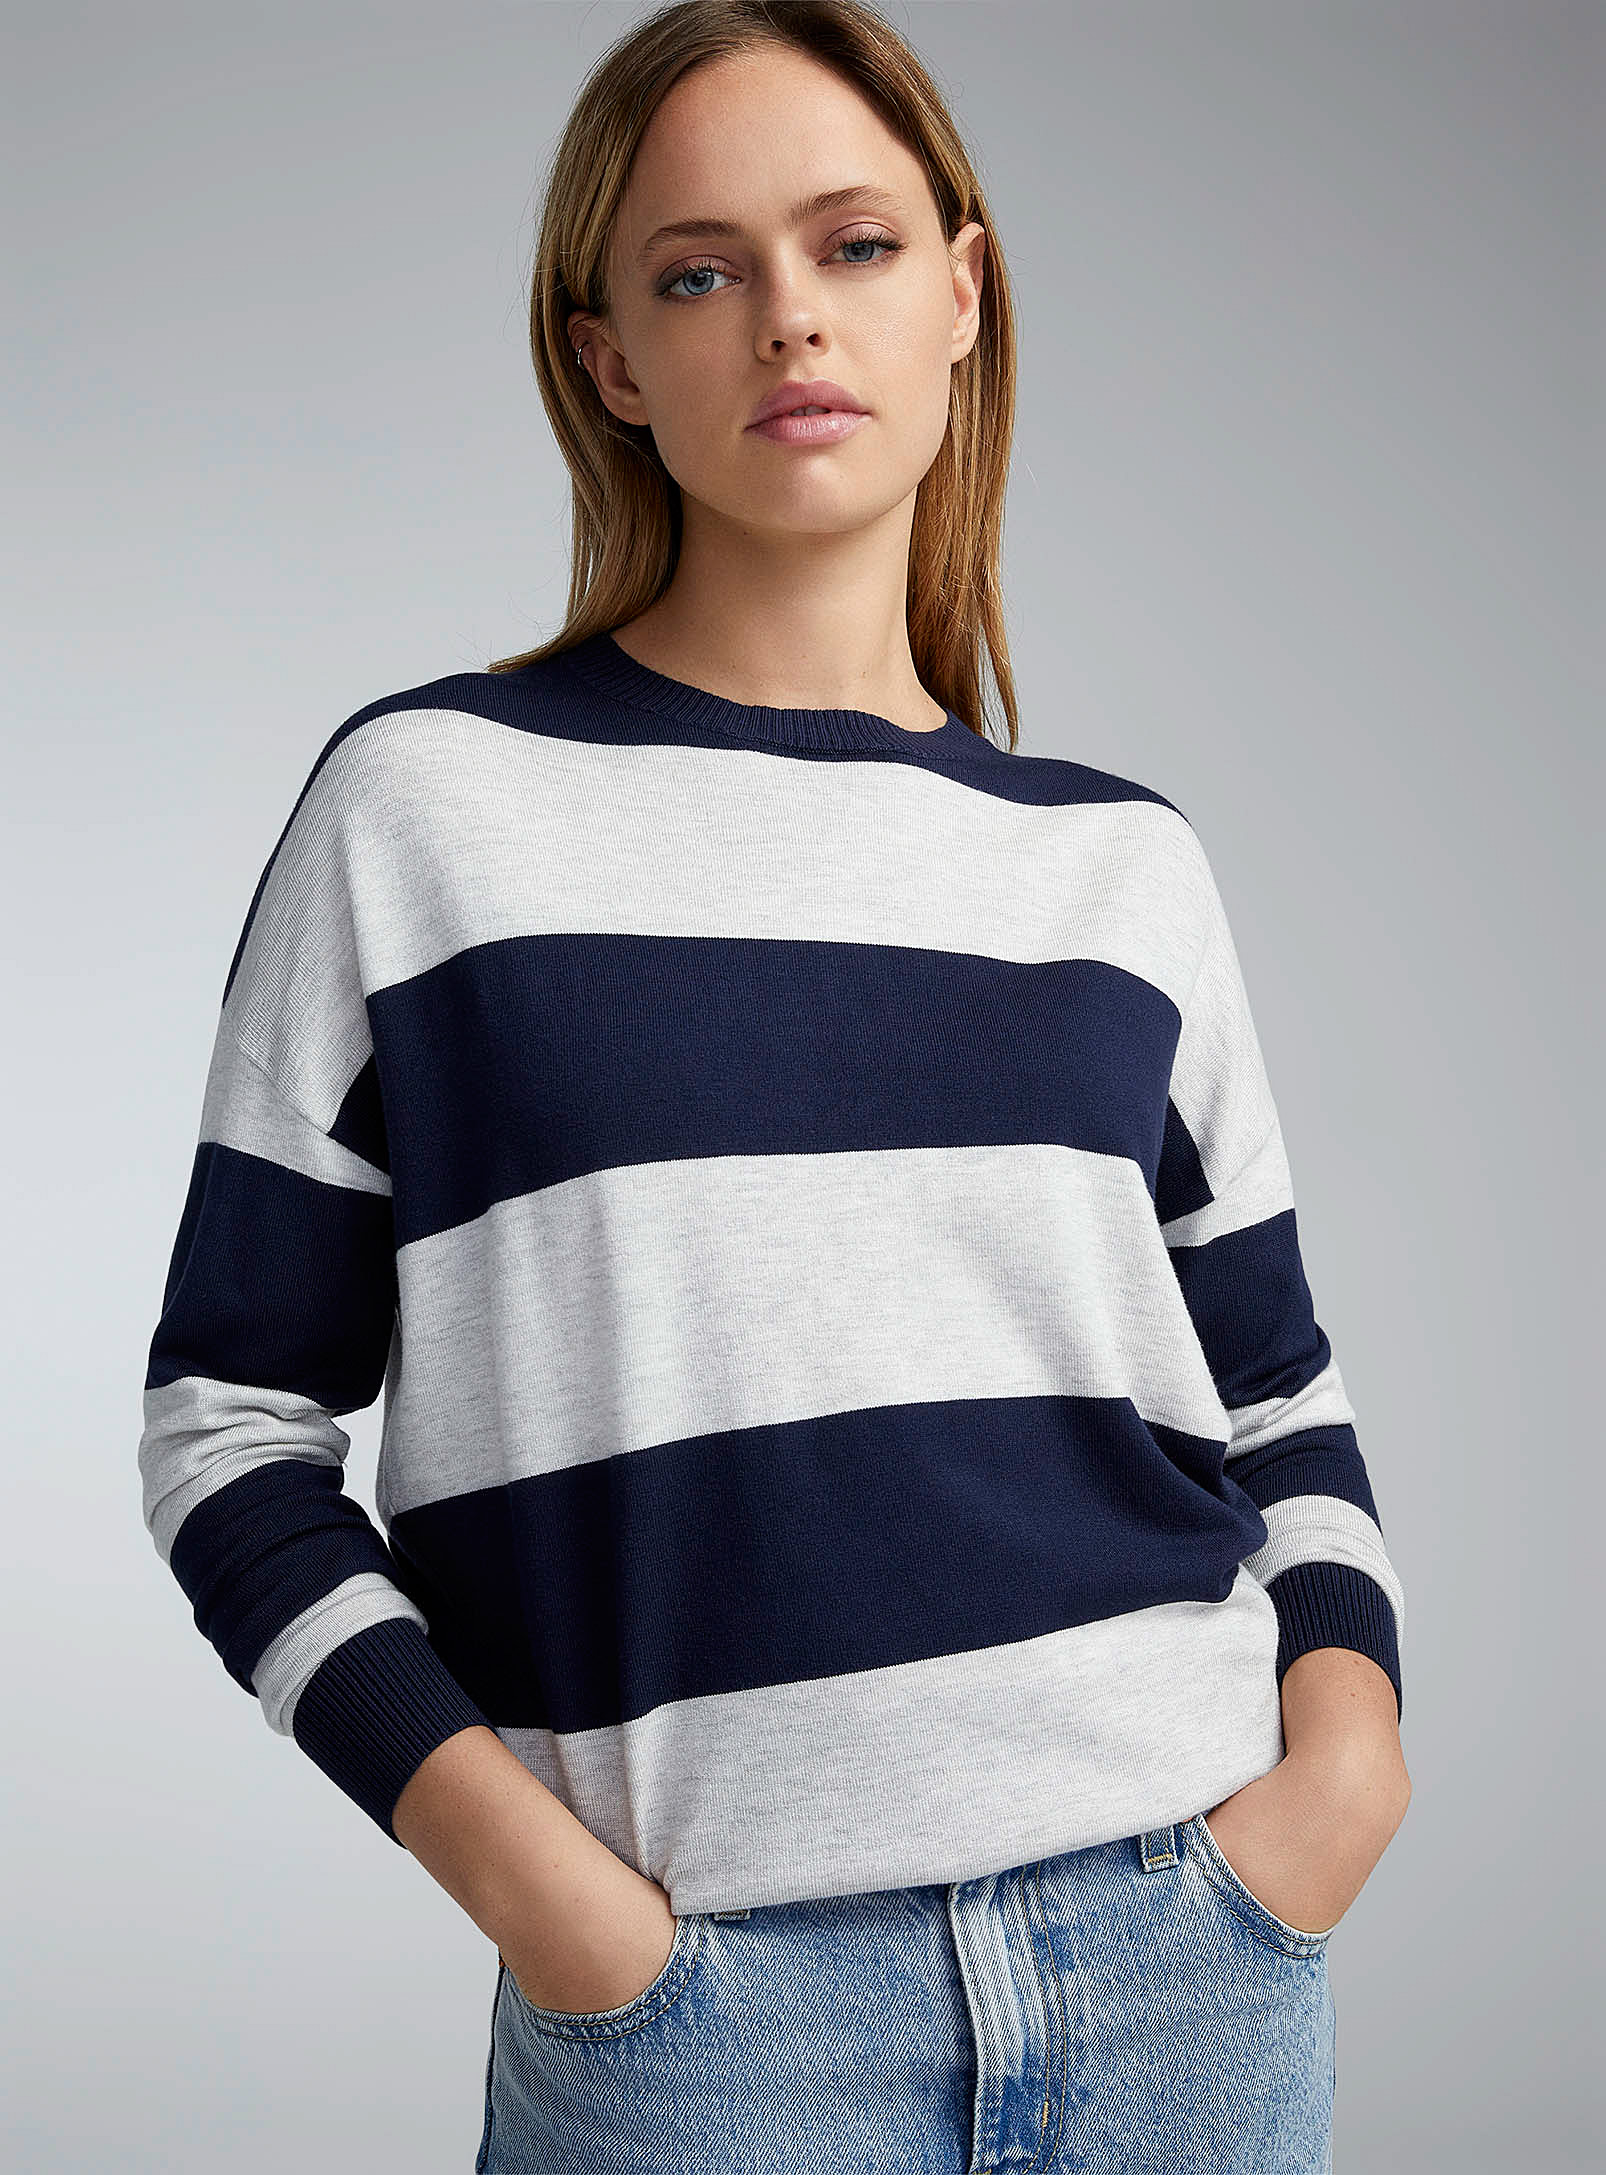 Twik Block Stripes Sweater In Marine Blue